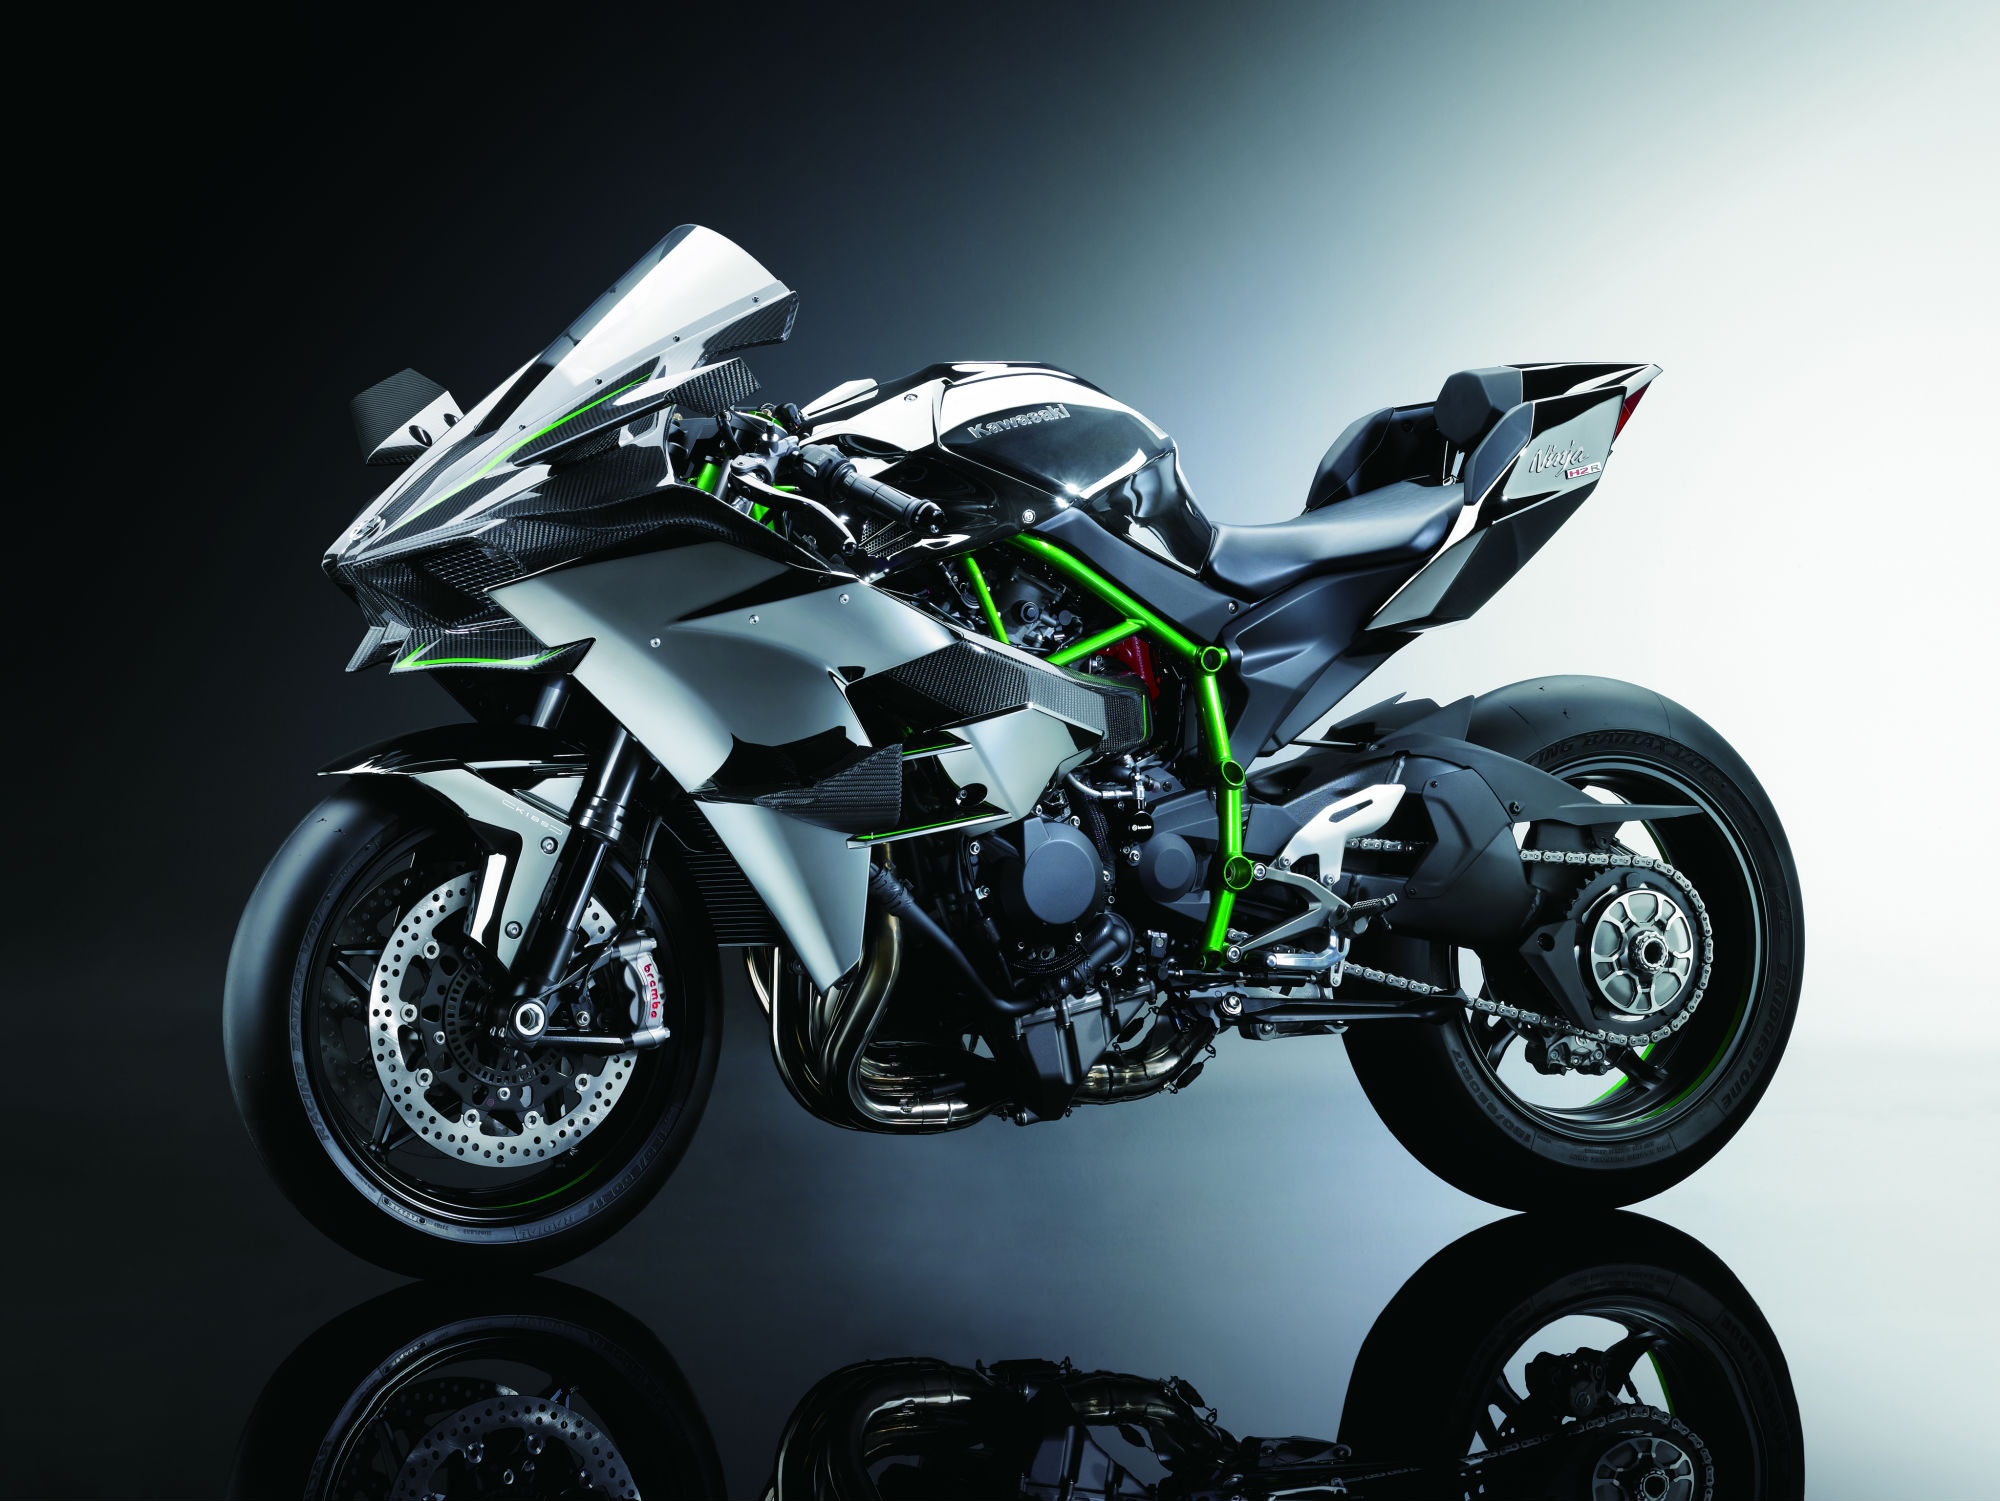 Intermot 2014: Kawasaki Ninja H2R and re... | Visordown